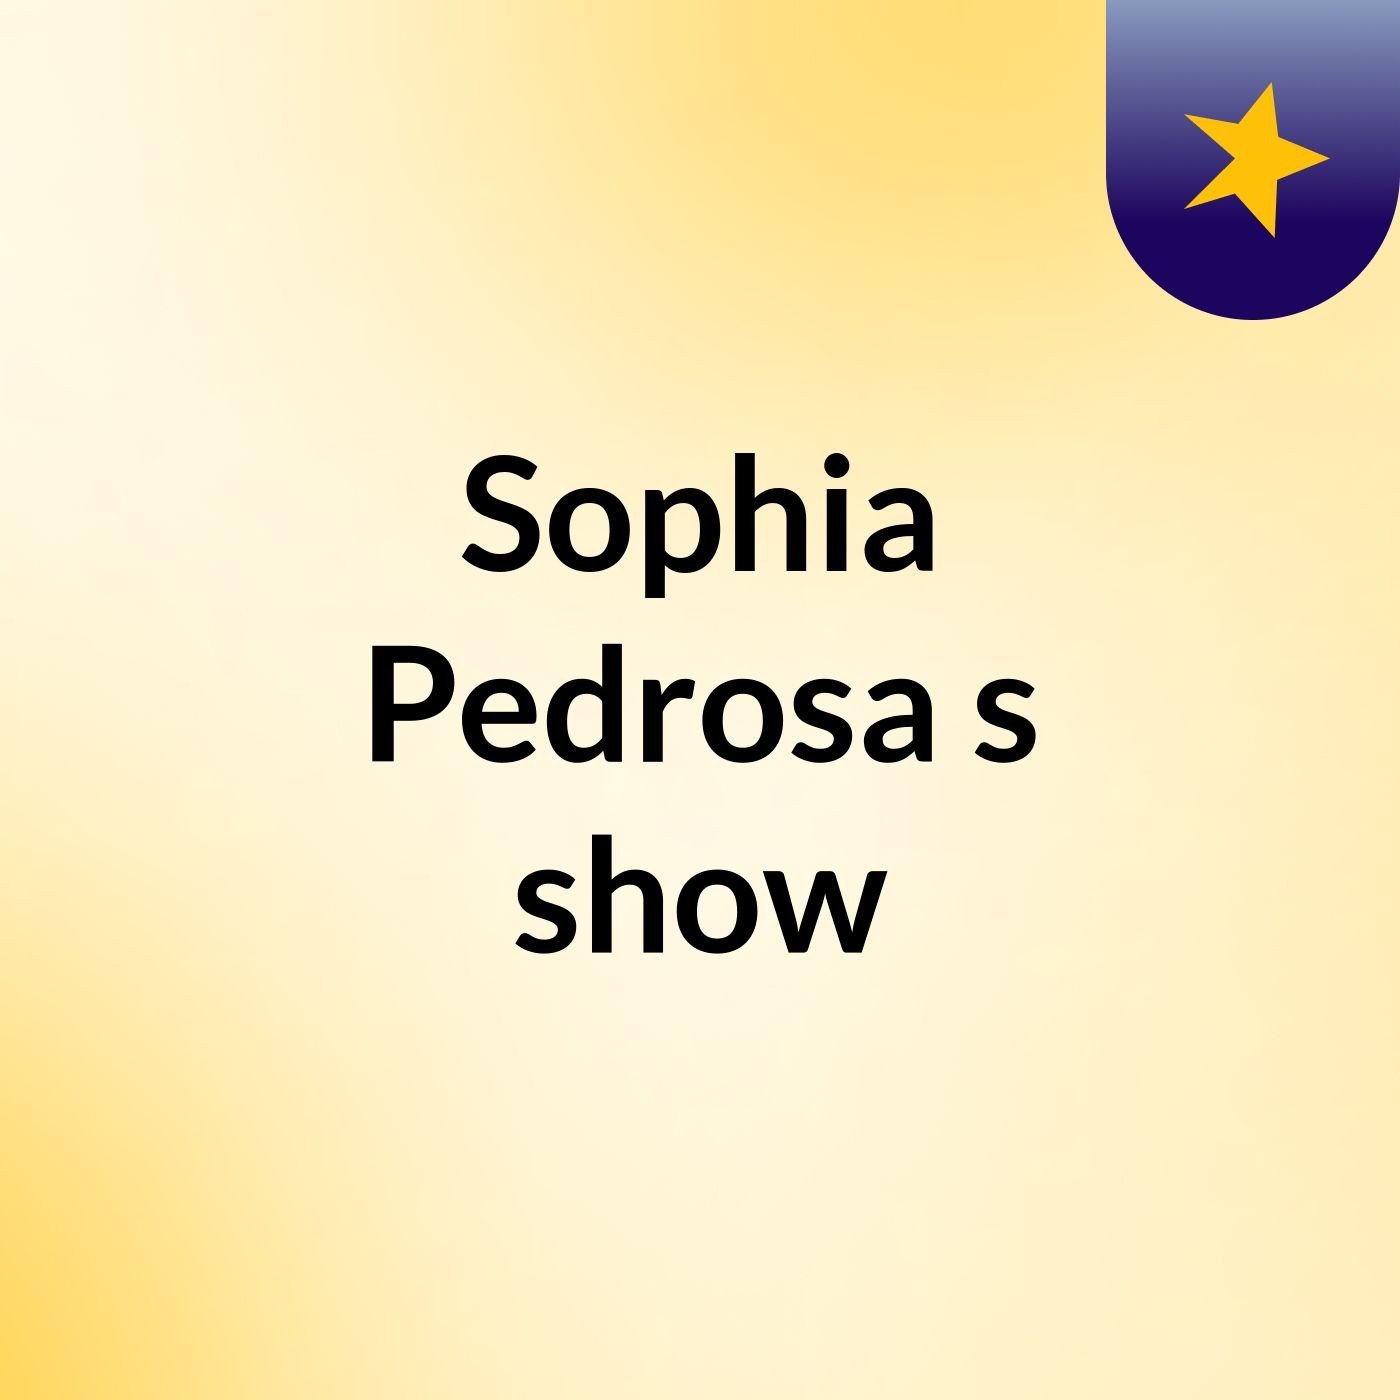 Sophia Pedrosa's show